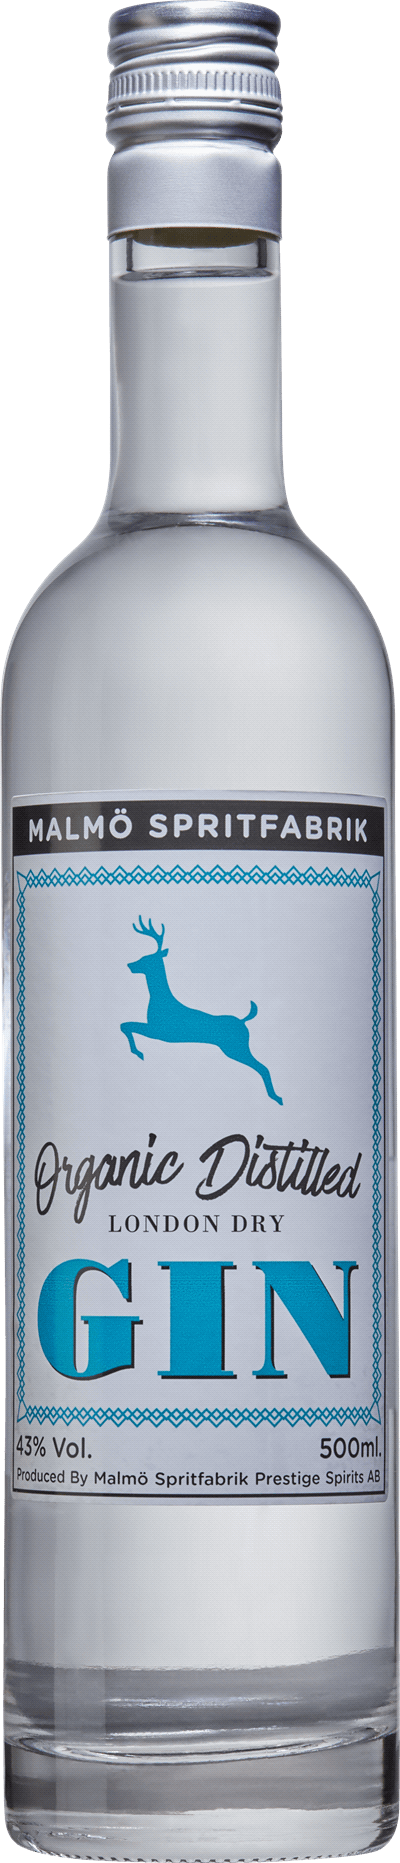 Organic Distilled Gin Malmö Spritfabrik